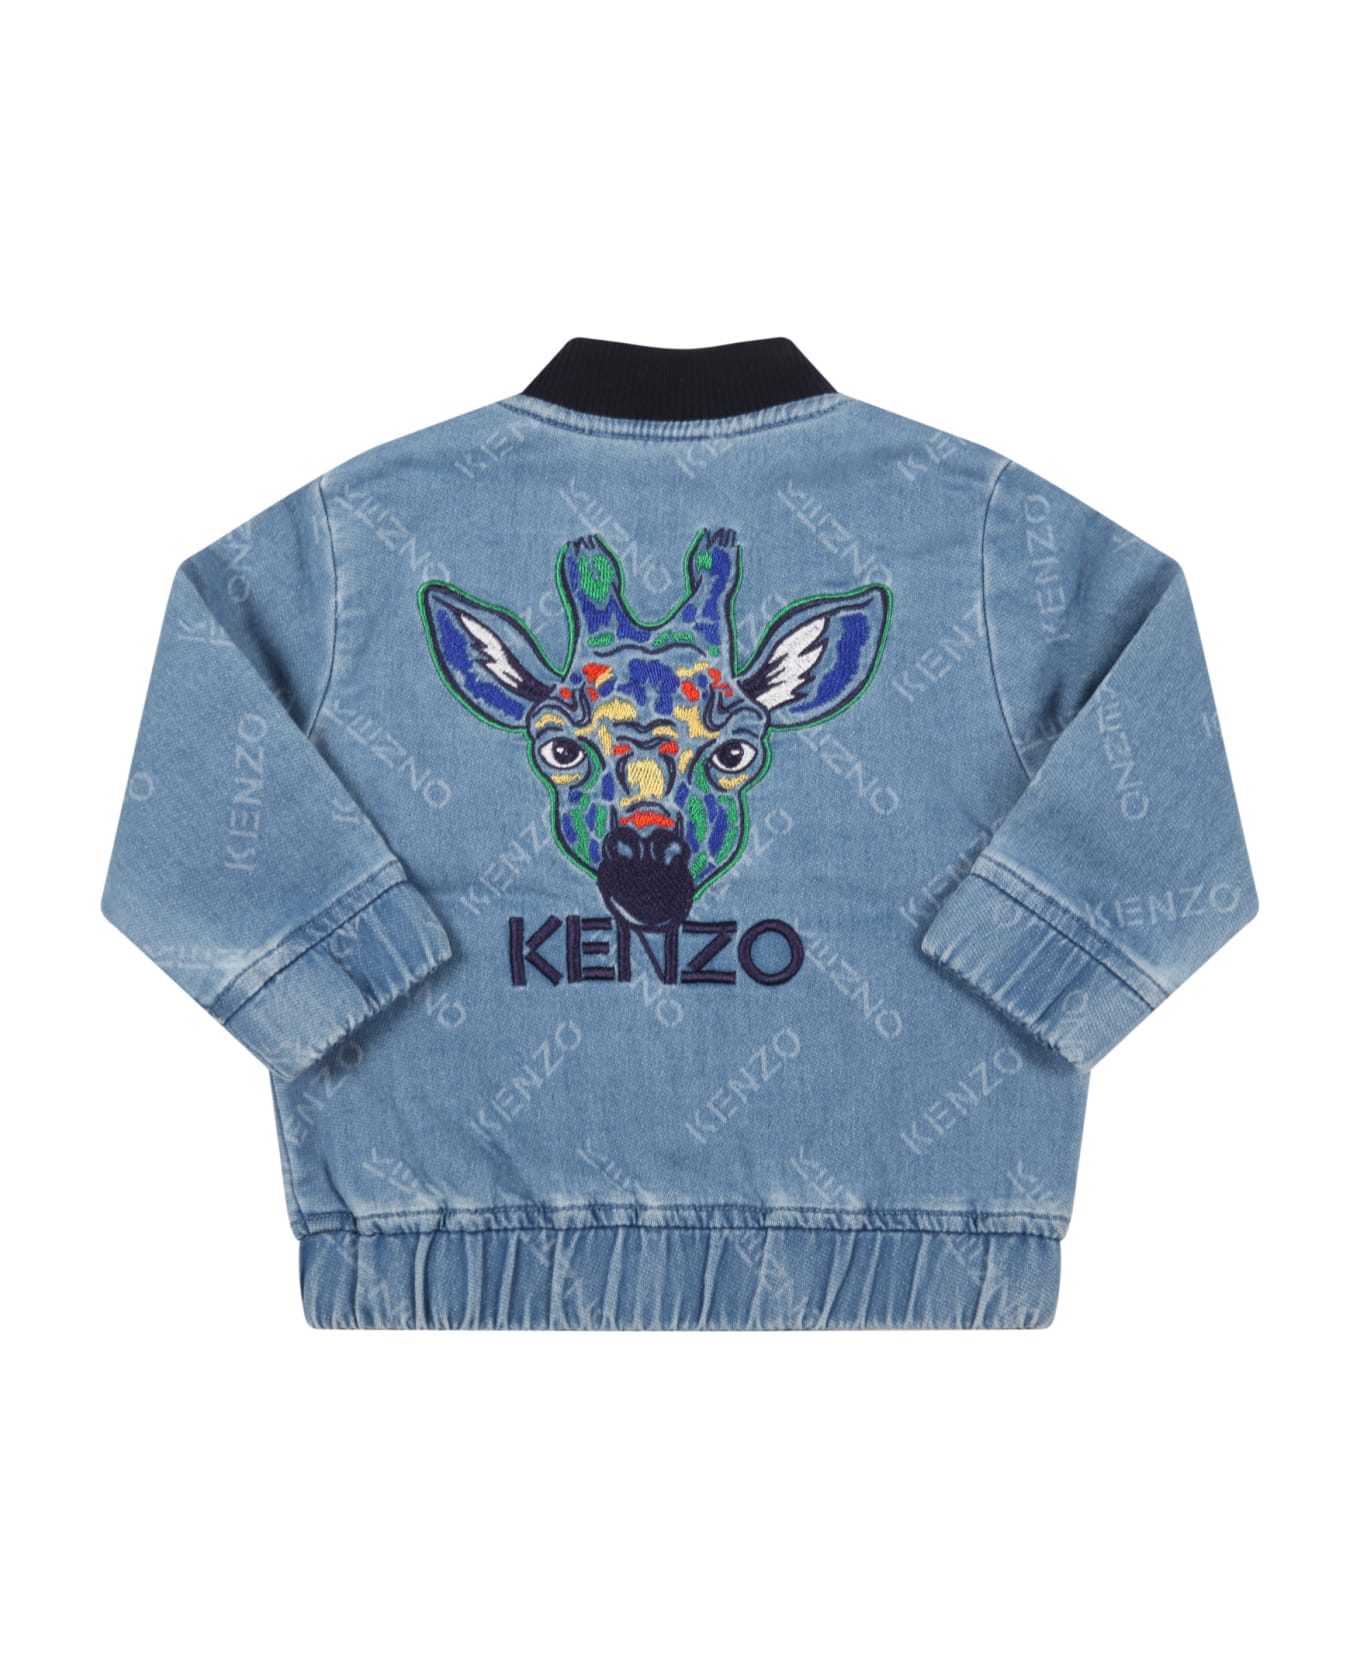 Kenzo Kids Light Blue Sweatshirt For Baby Boy With Logos - Denim